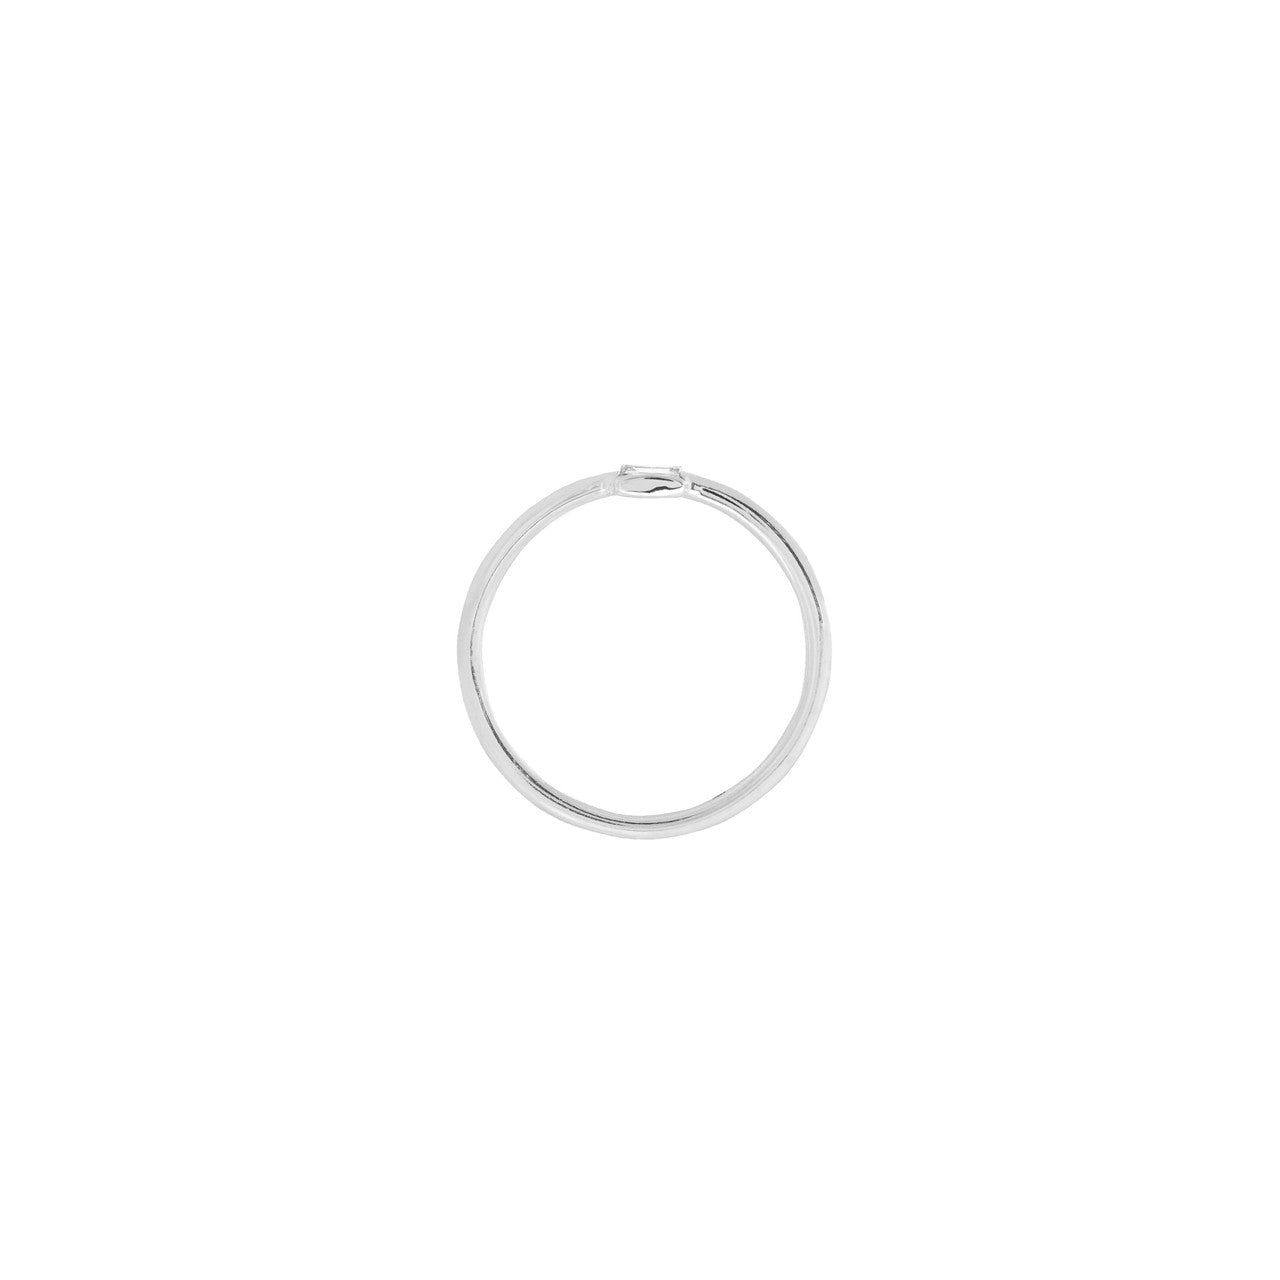 1/10 ctw Baguette Cut Diamond Bezel Set Fashion Ring in 14k White Gold